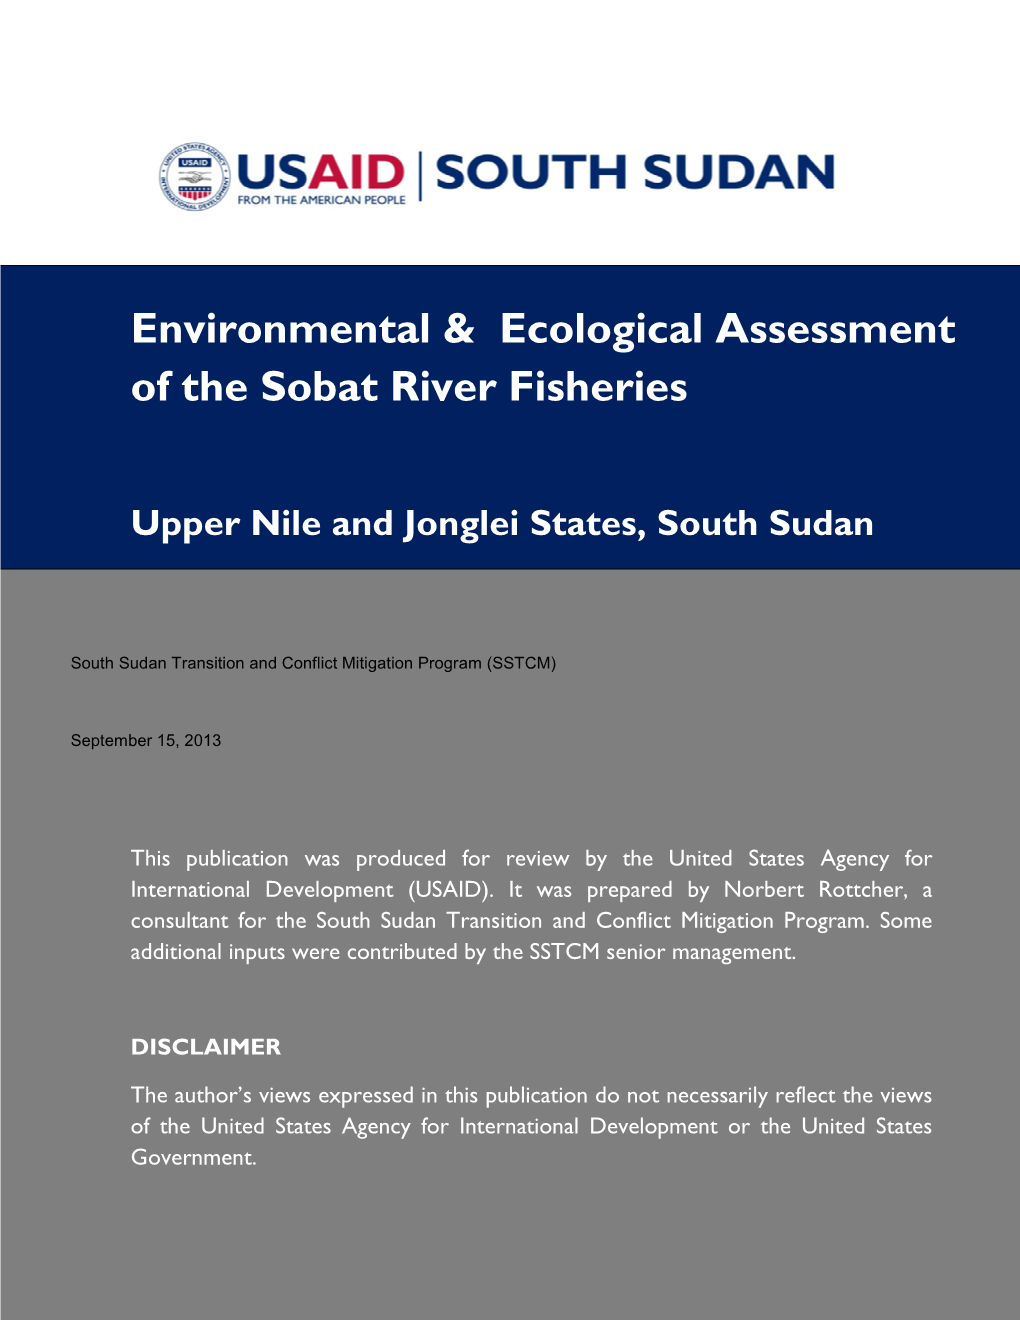 Environmental & Ecological Assessment of the Sobat River